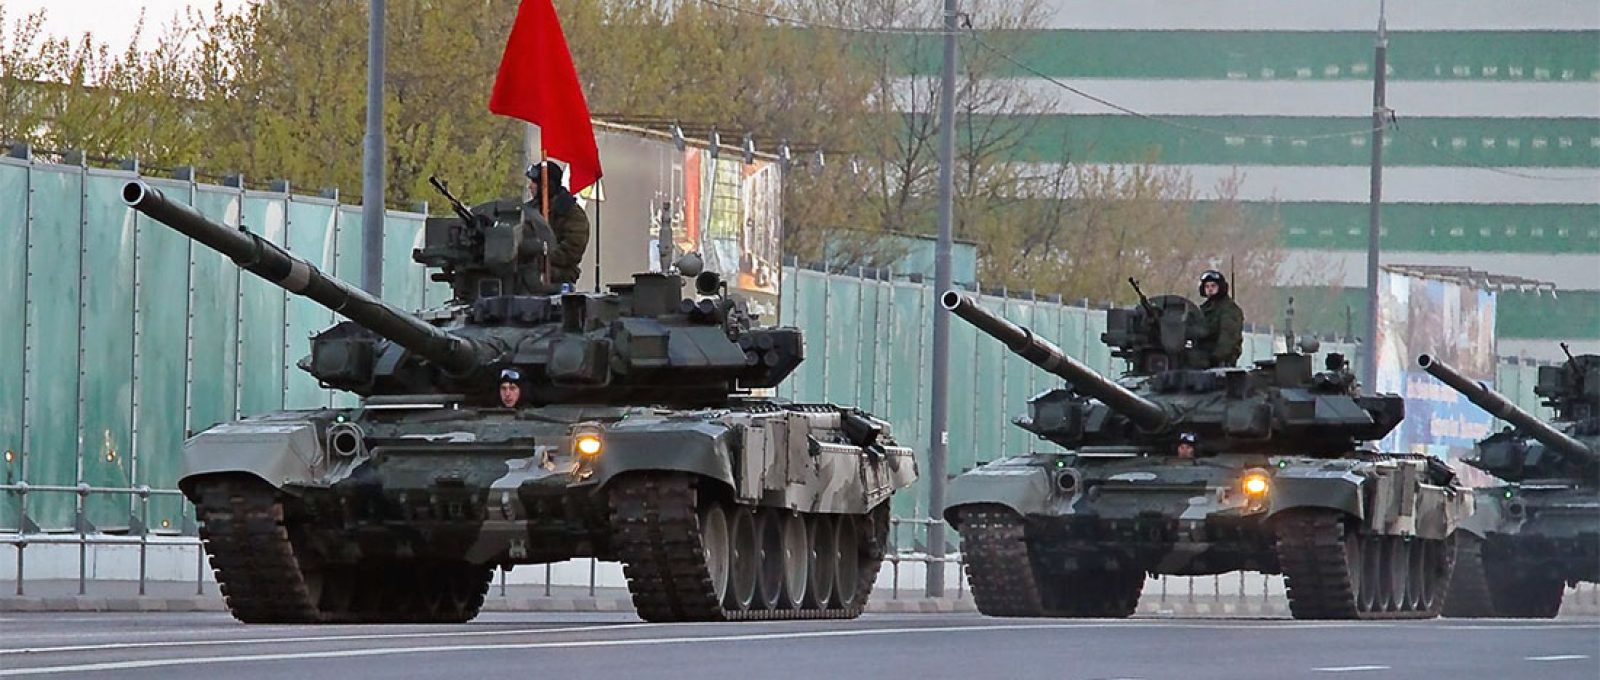 Tanque de batalha principal russo T-90 (Exército Russo).